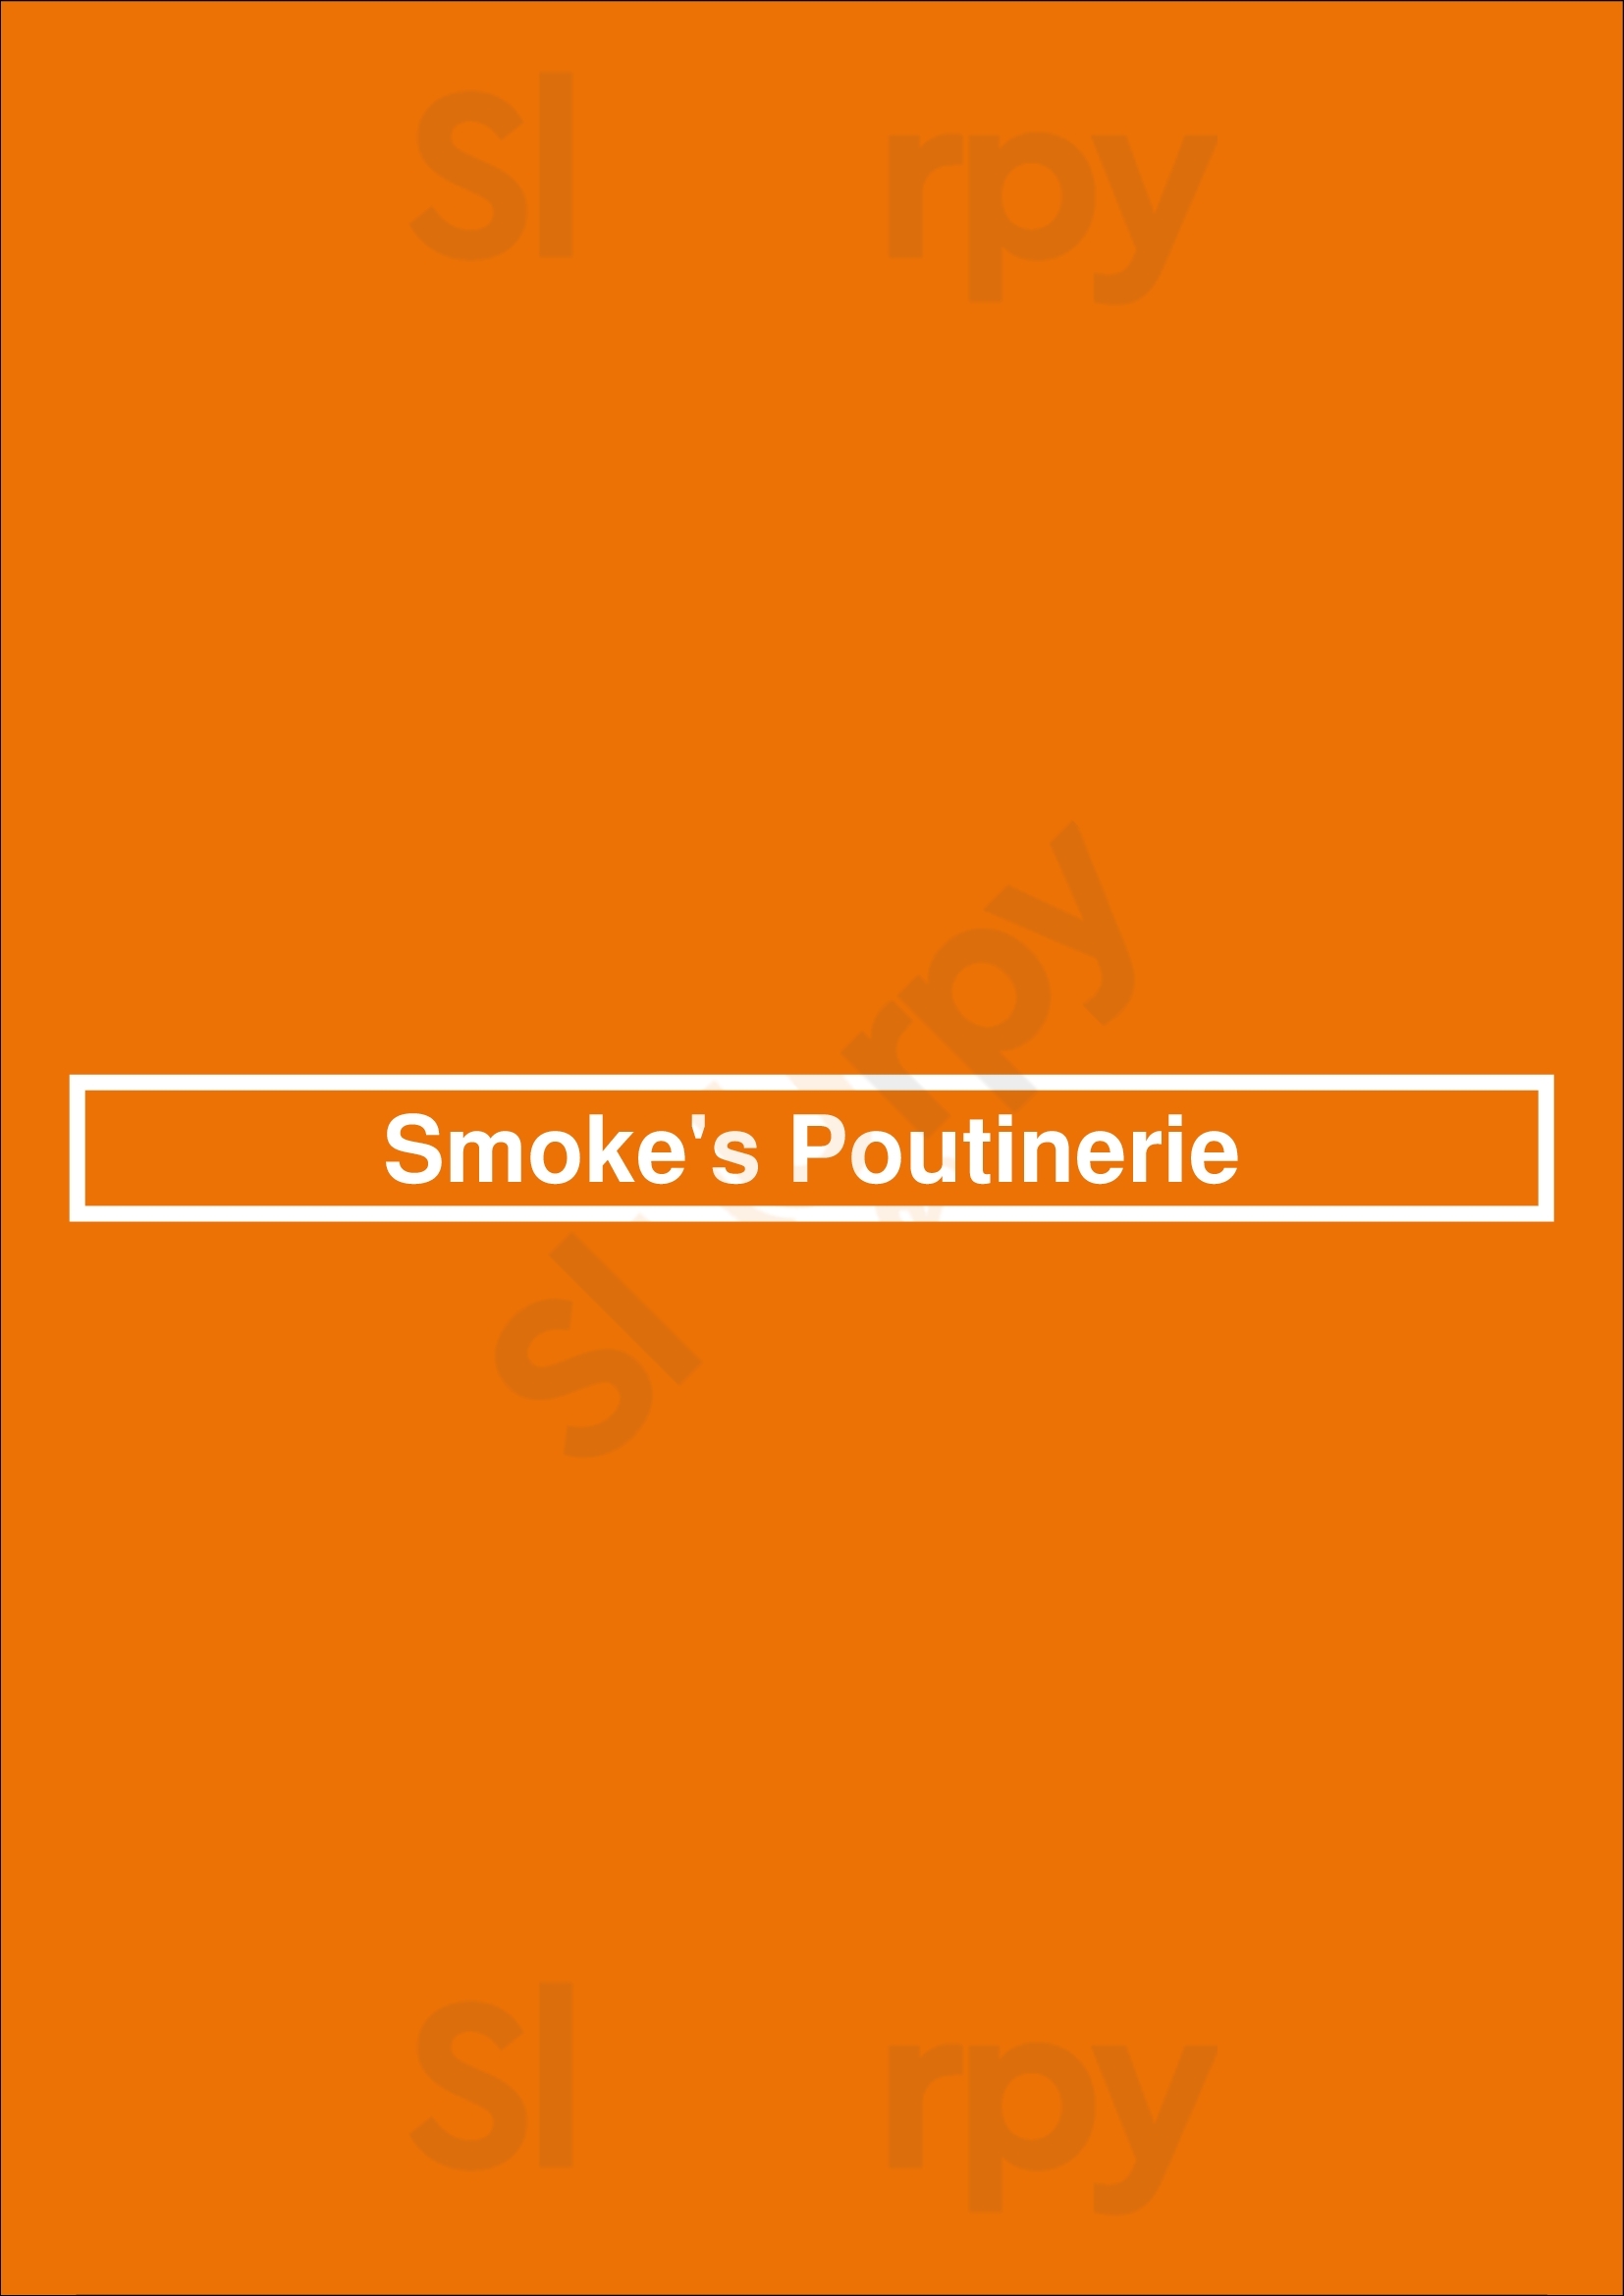 Smoke's Poutinerie Mississauga Menu - 1